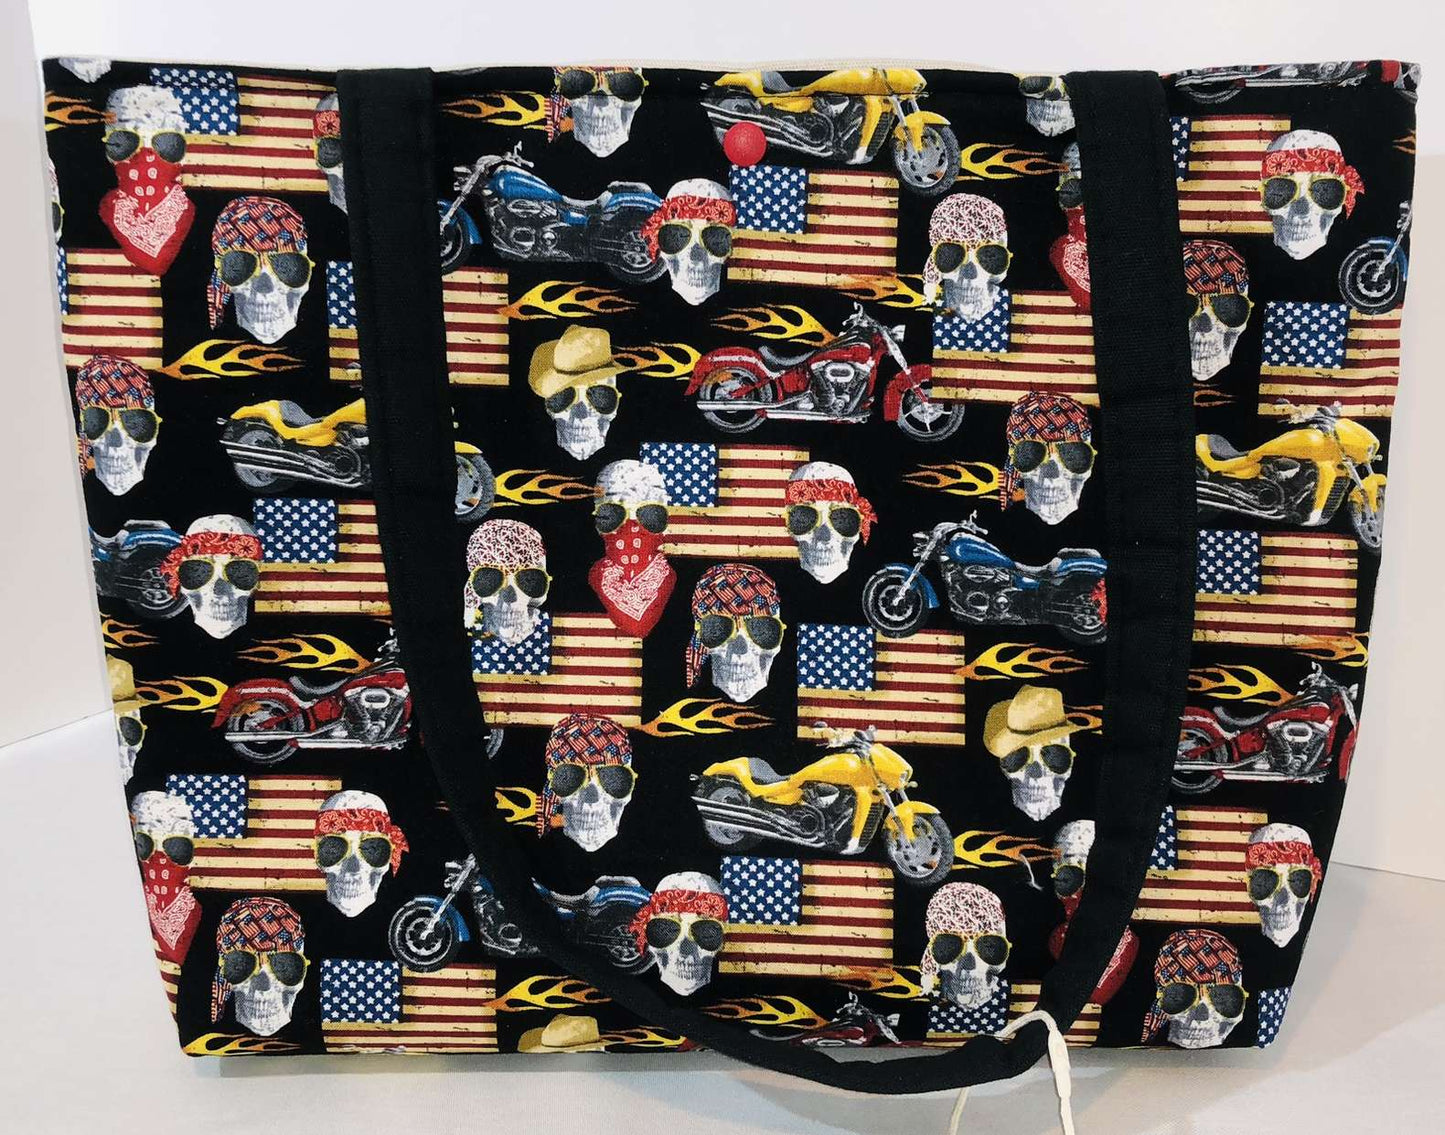 Motorcycle Skulls USA Flag Black Shoulder Bag Gothic Biker Chic Halloween Purse Handbag Tote + Wristlet Key Fob